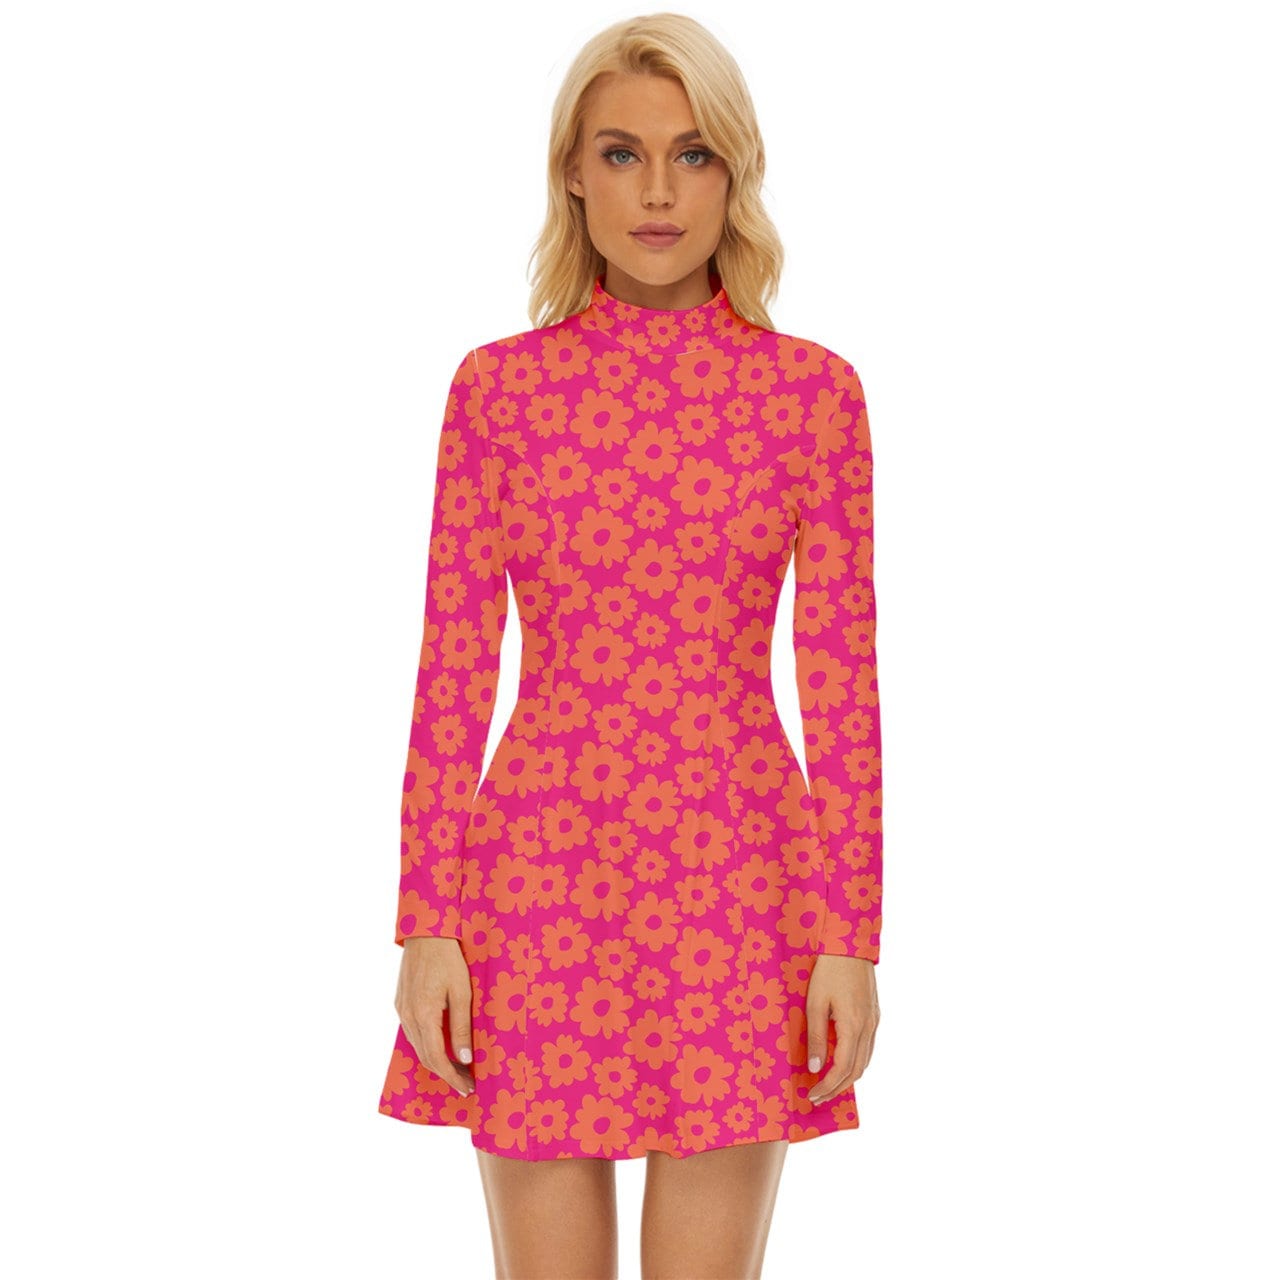 60s Dress Style, Mod Dress, Pink Mod Dress, Turtle neck dress, GOGO Dress, 60s style dress, 60s mini dress, Floral Dress, Retro Dress